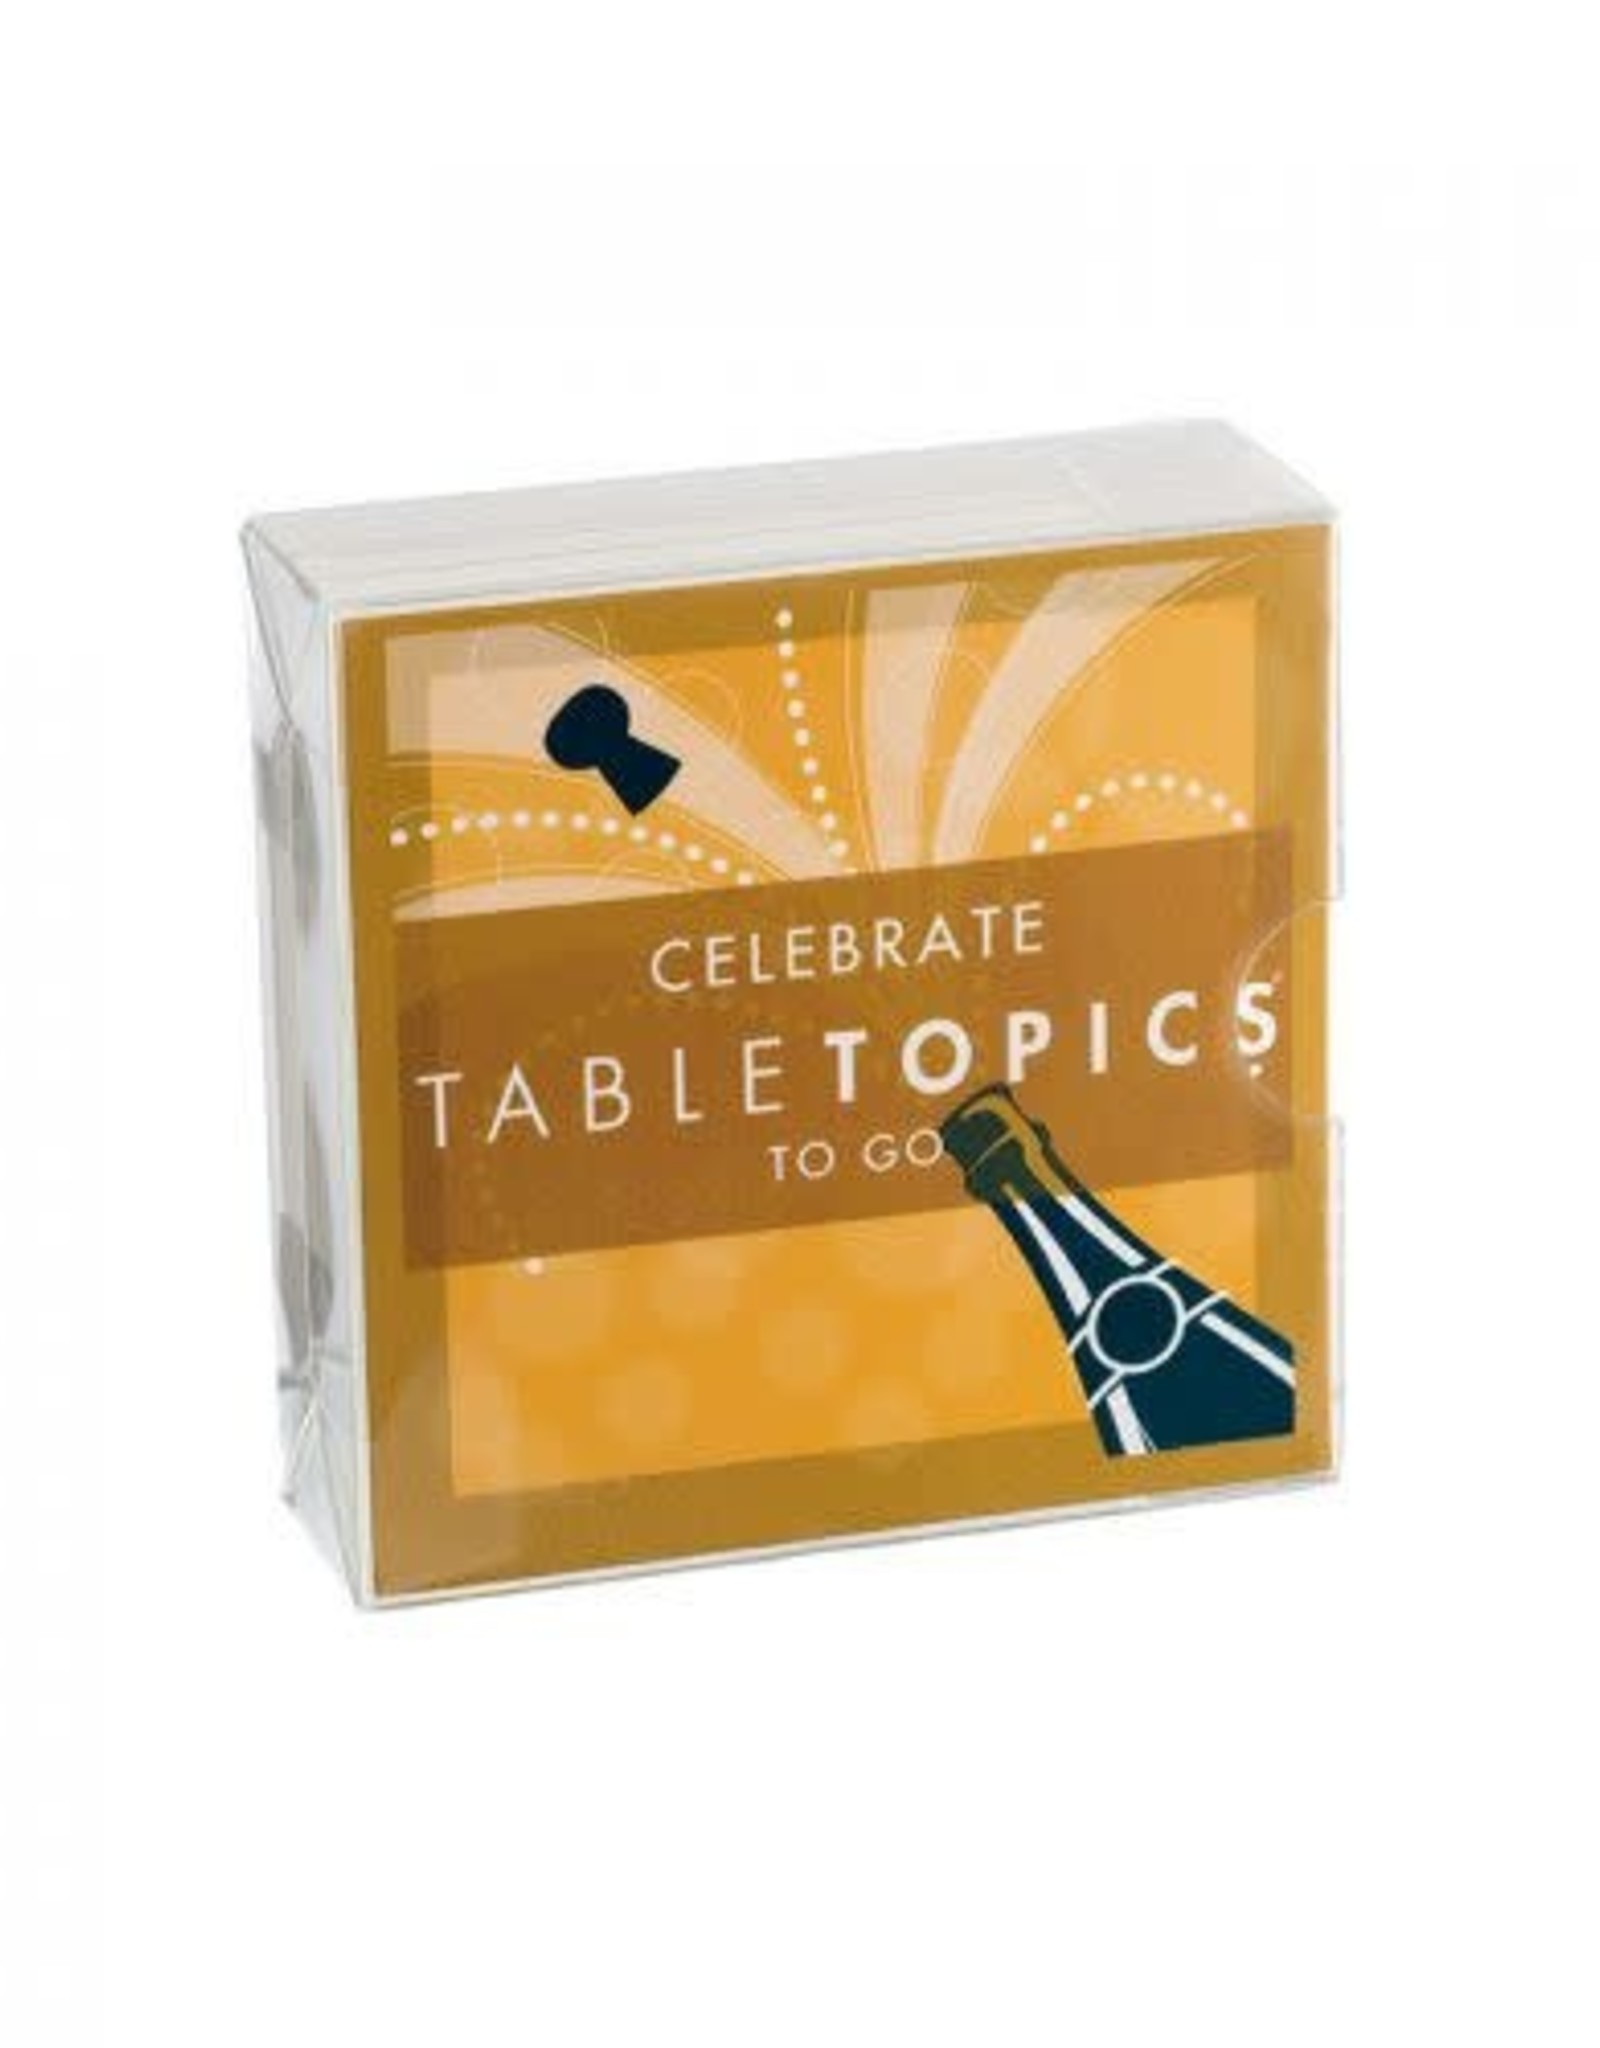 Tabletopics CELEBRATE TO GO TABLE TOPICS